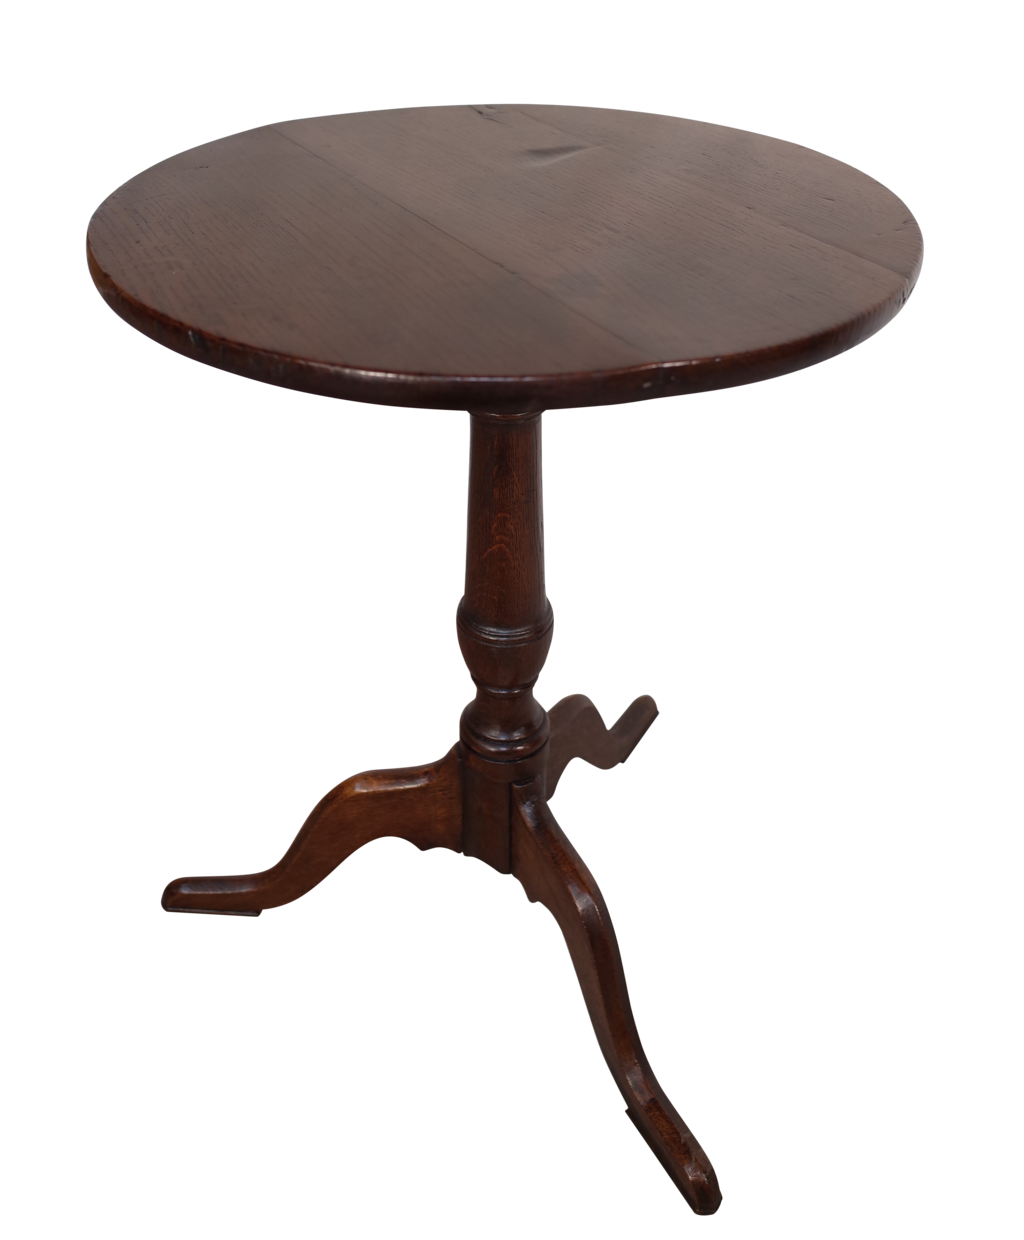 George III Oak Tripod Table